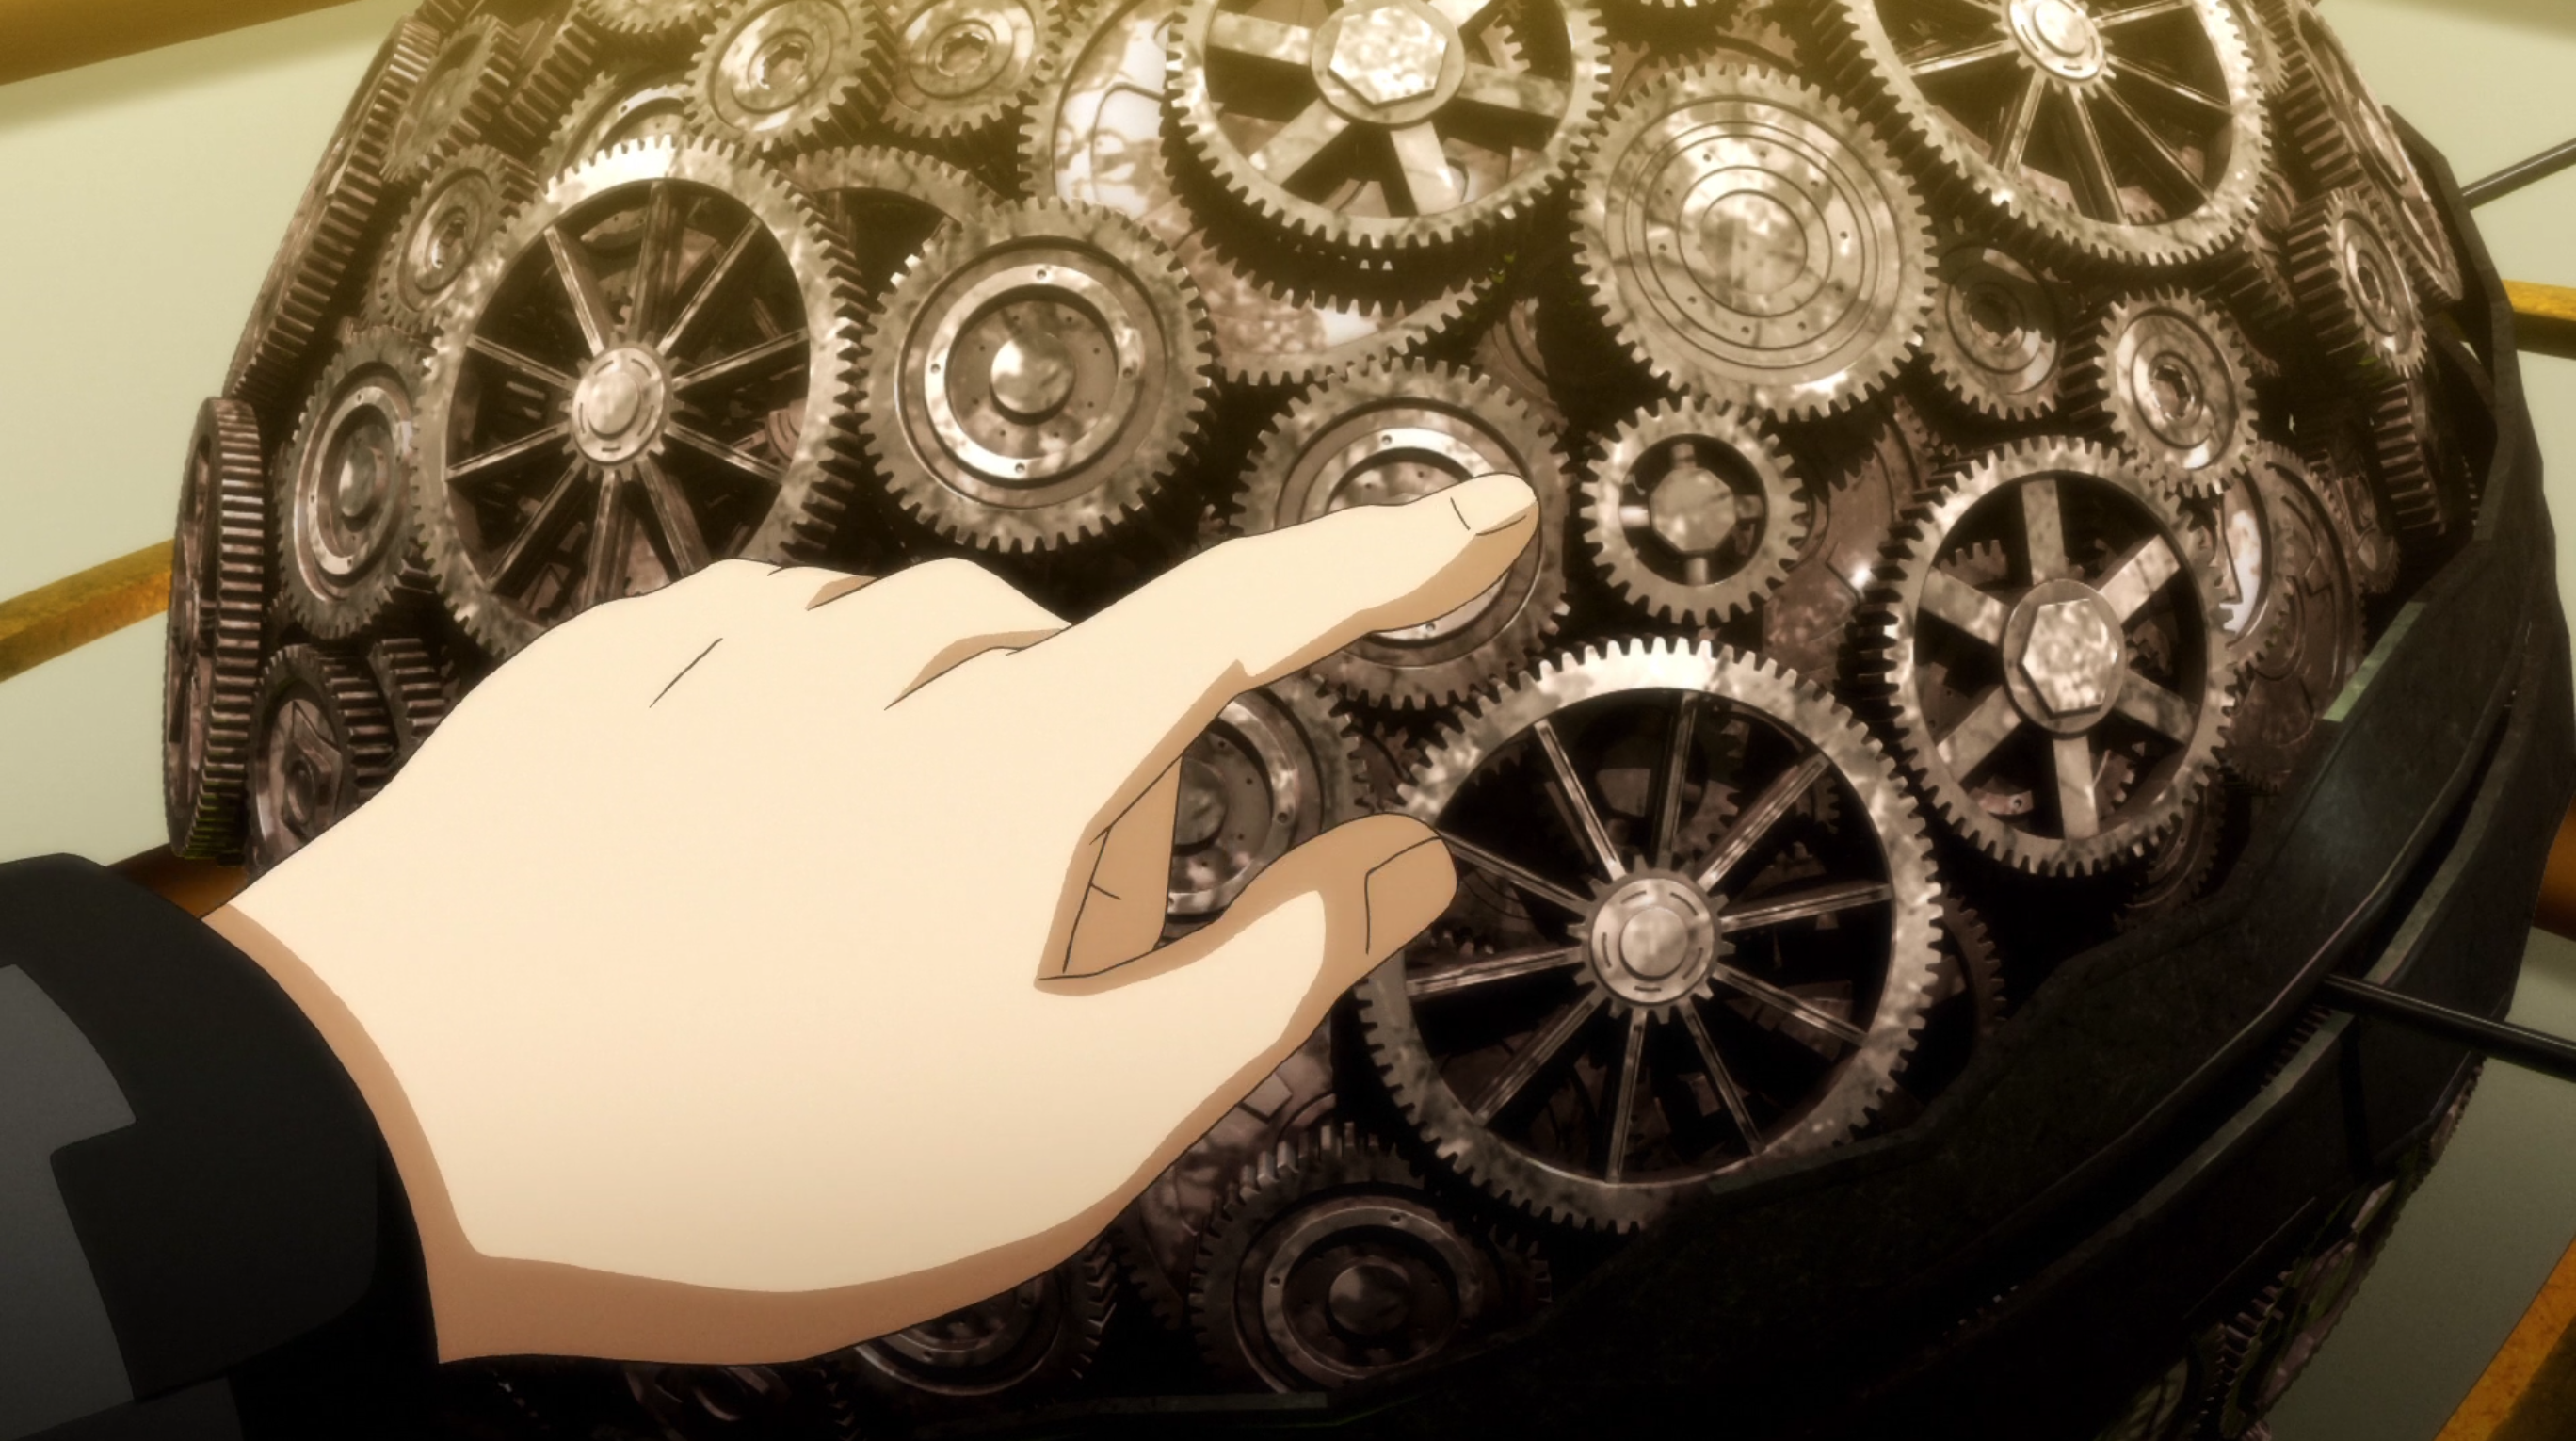 Clockwork Planet Anime Series Dual Audio English/Japanese with